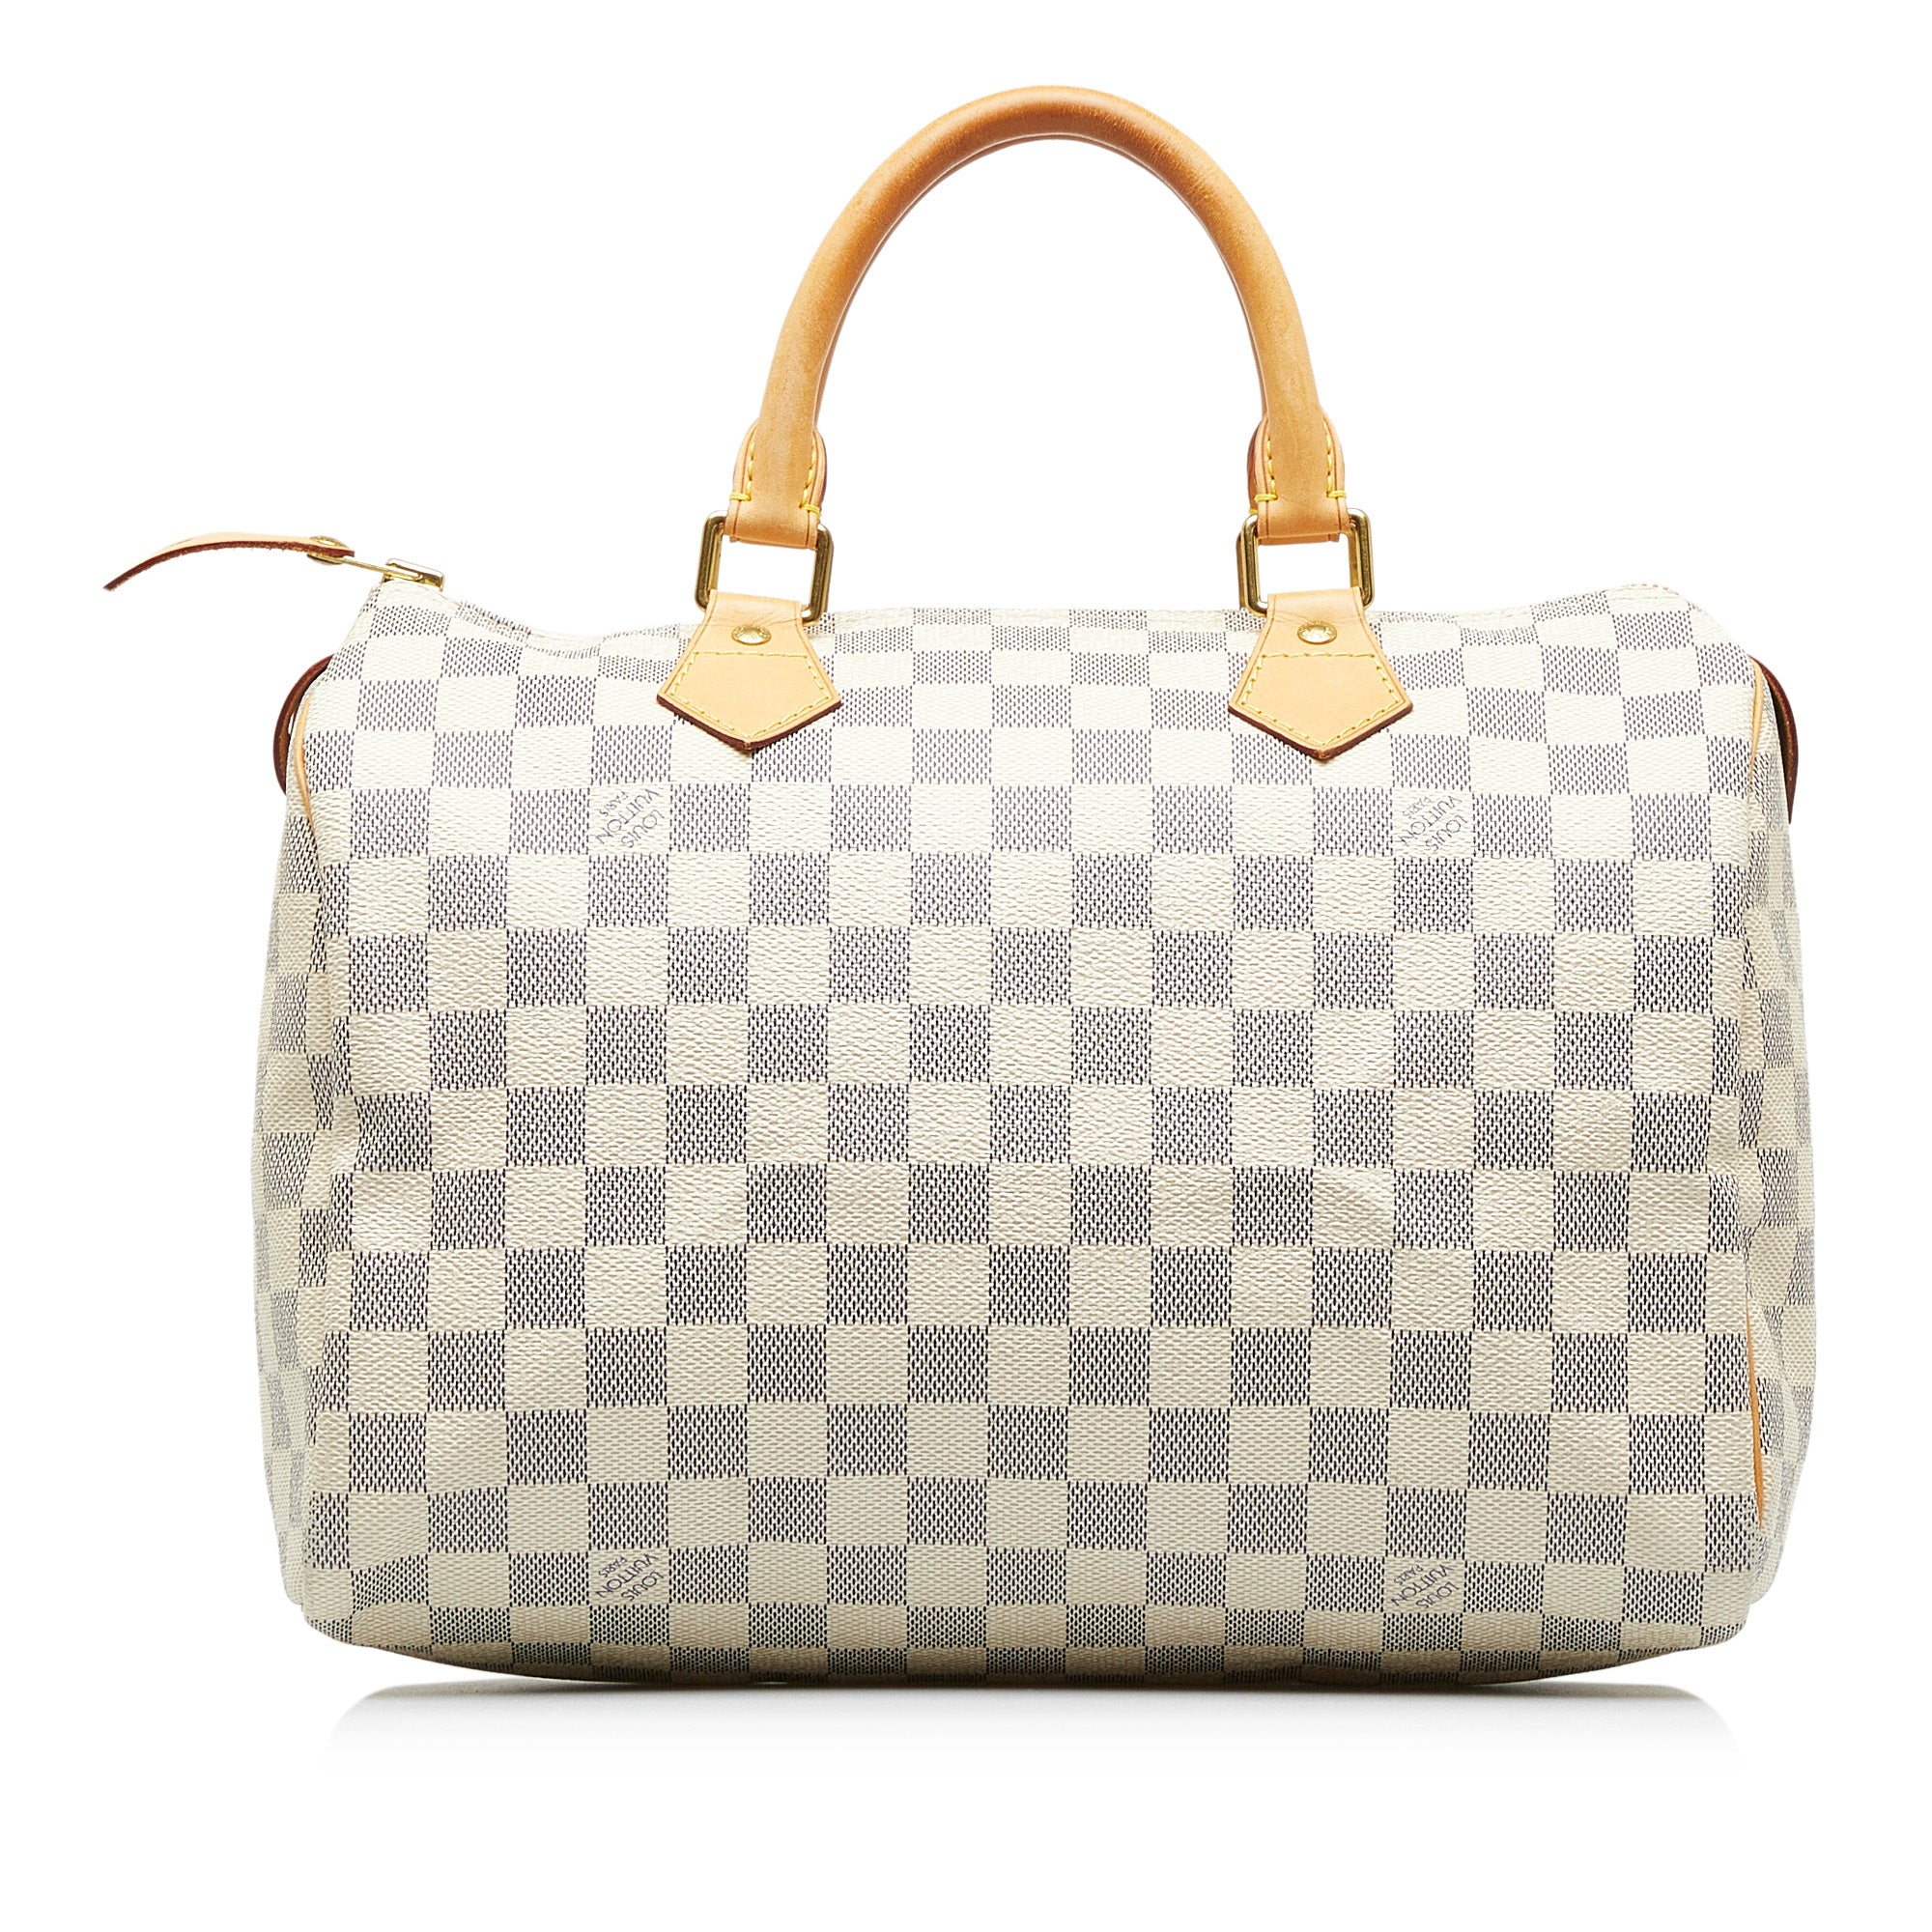 Louis Vuitton Damier Azur Speedy 30 Satchel Handbag - 15% OFF